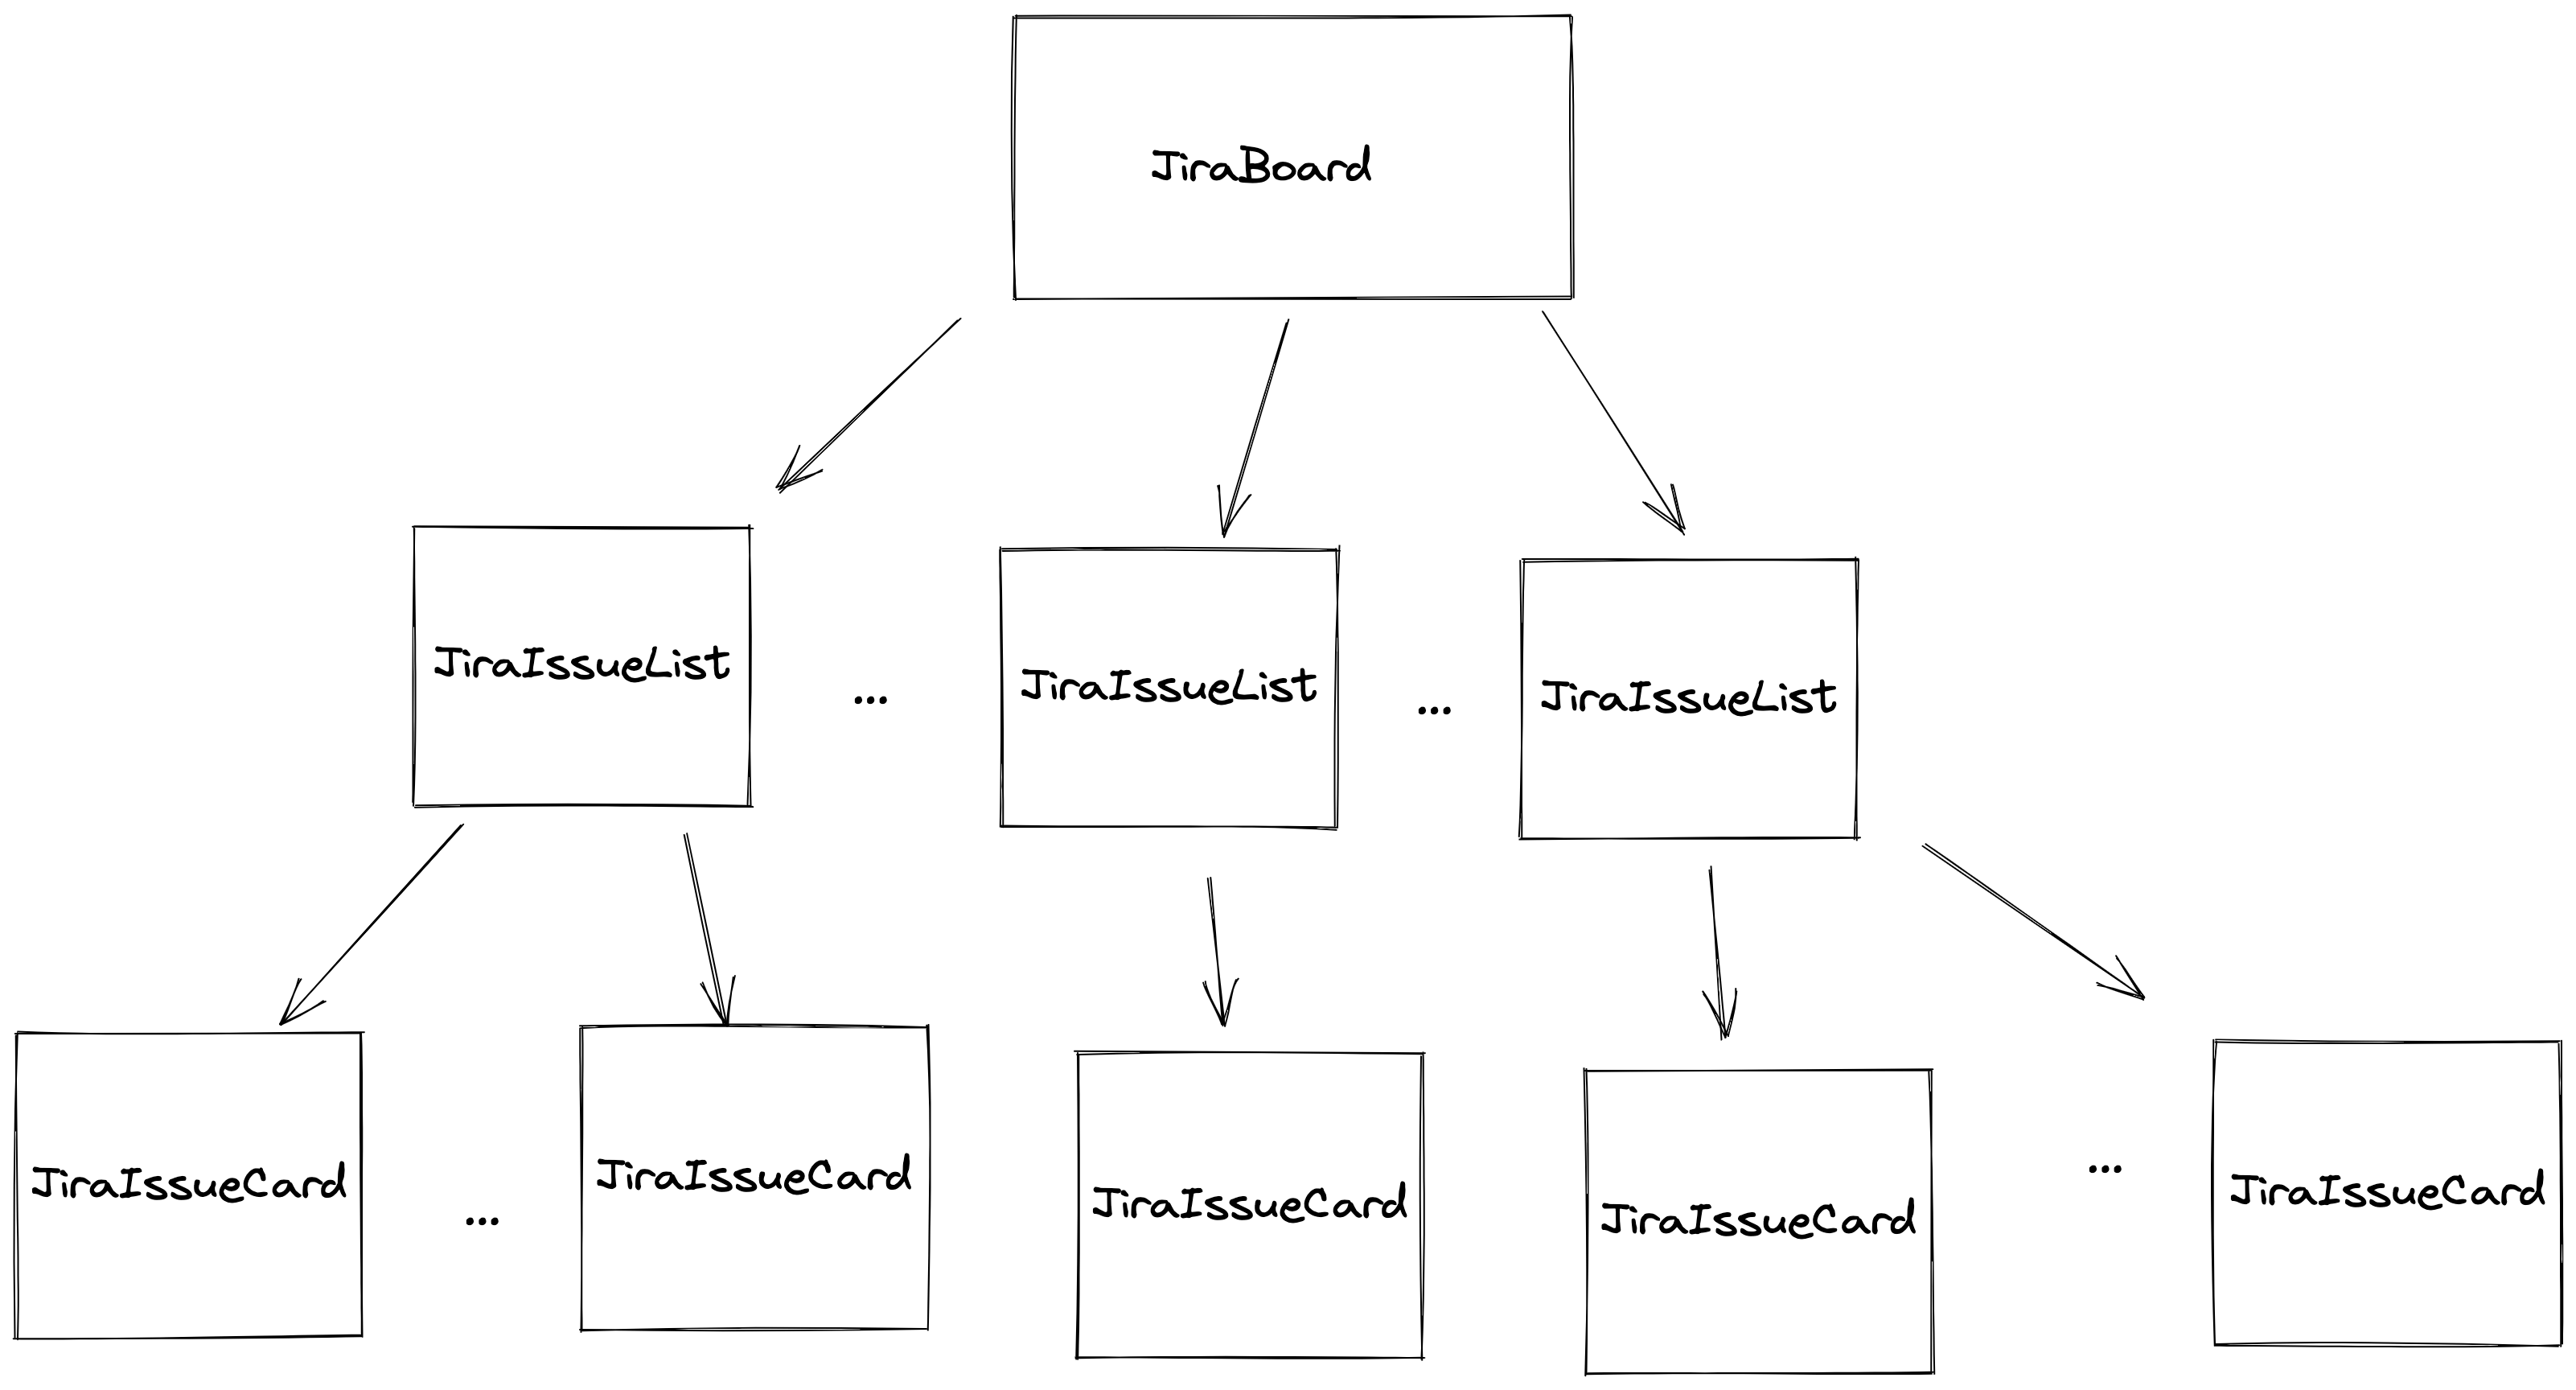 Deciding on component hierarchy